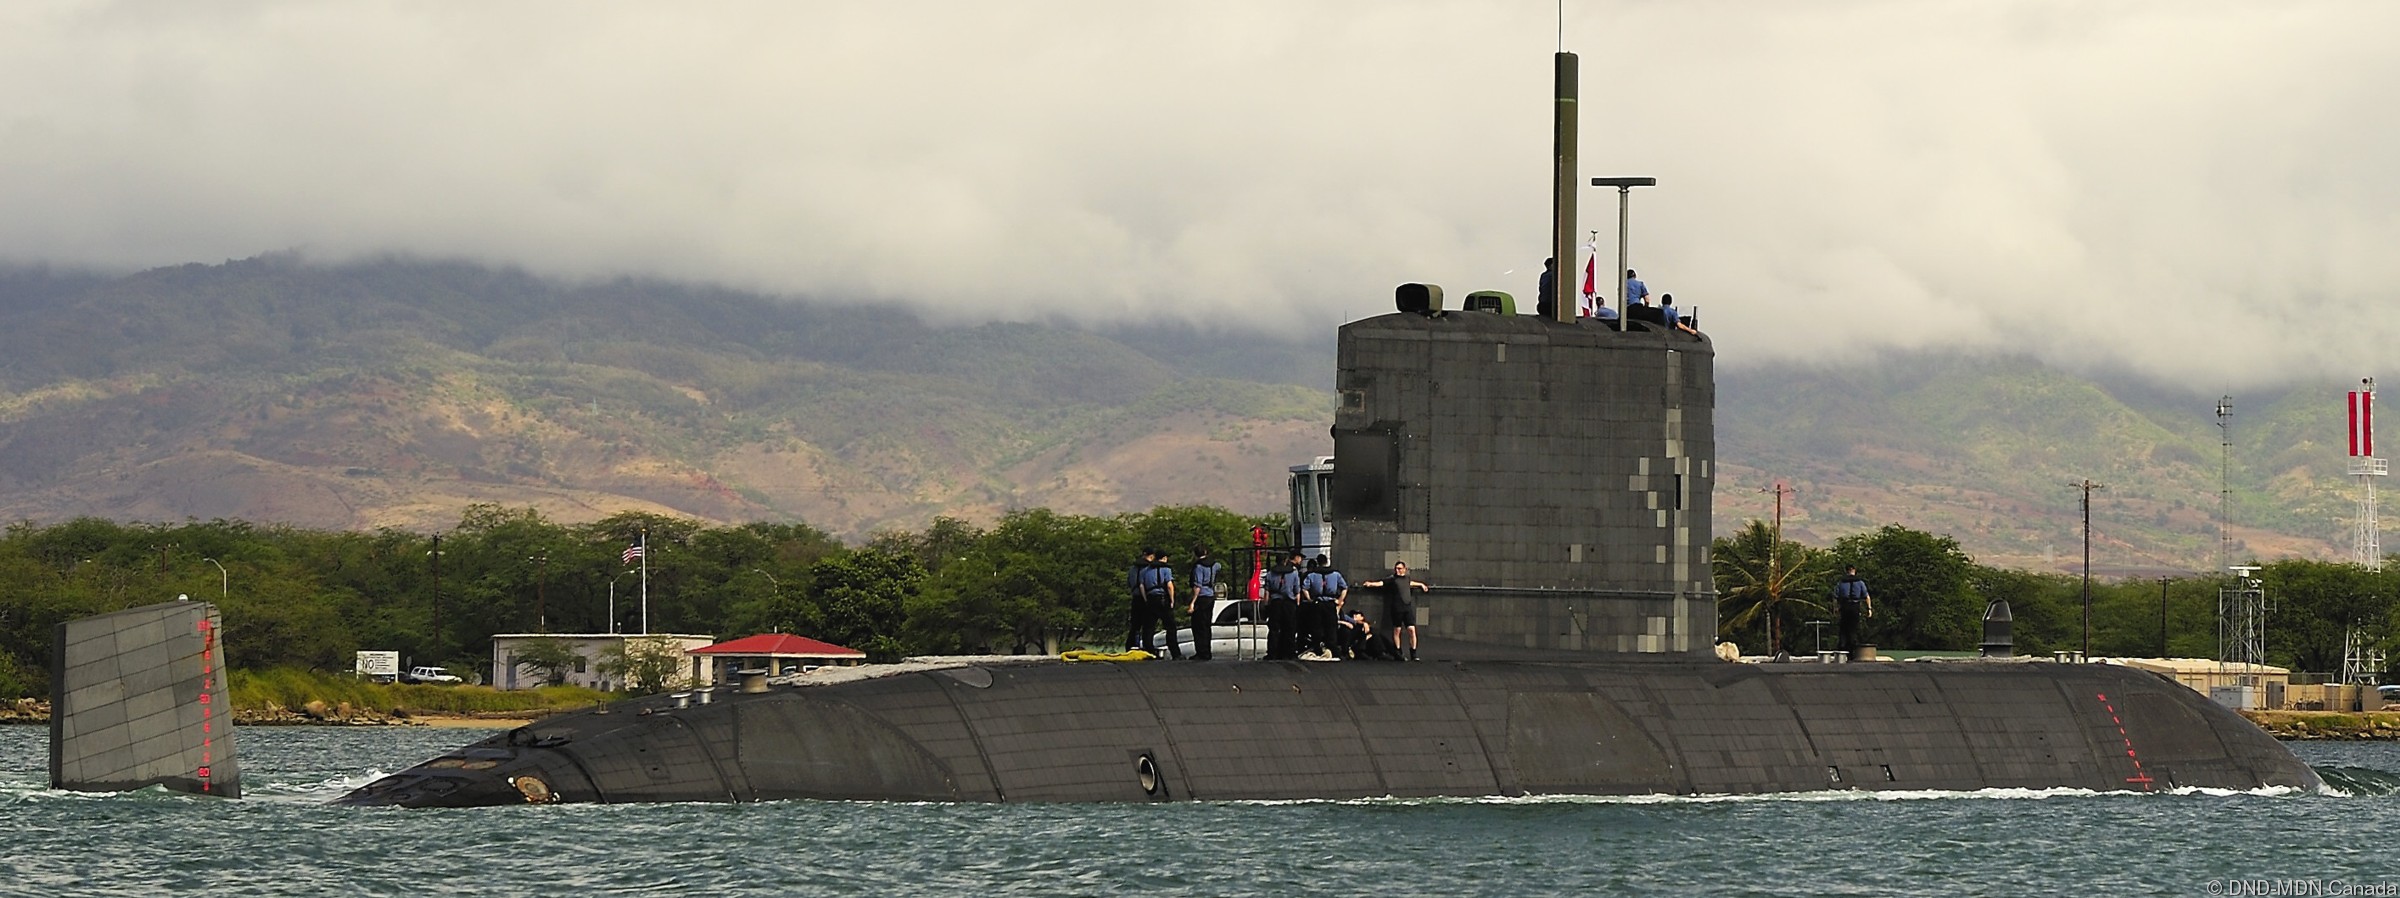 ssk-876 hmcs victoria upholder class attack submarine hunter killer ncsm royal canadian navy 37